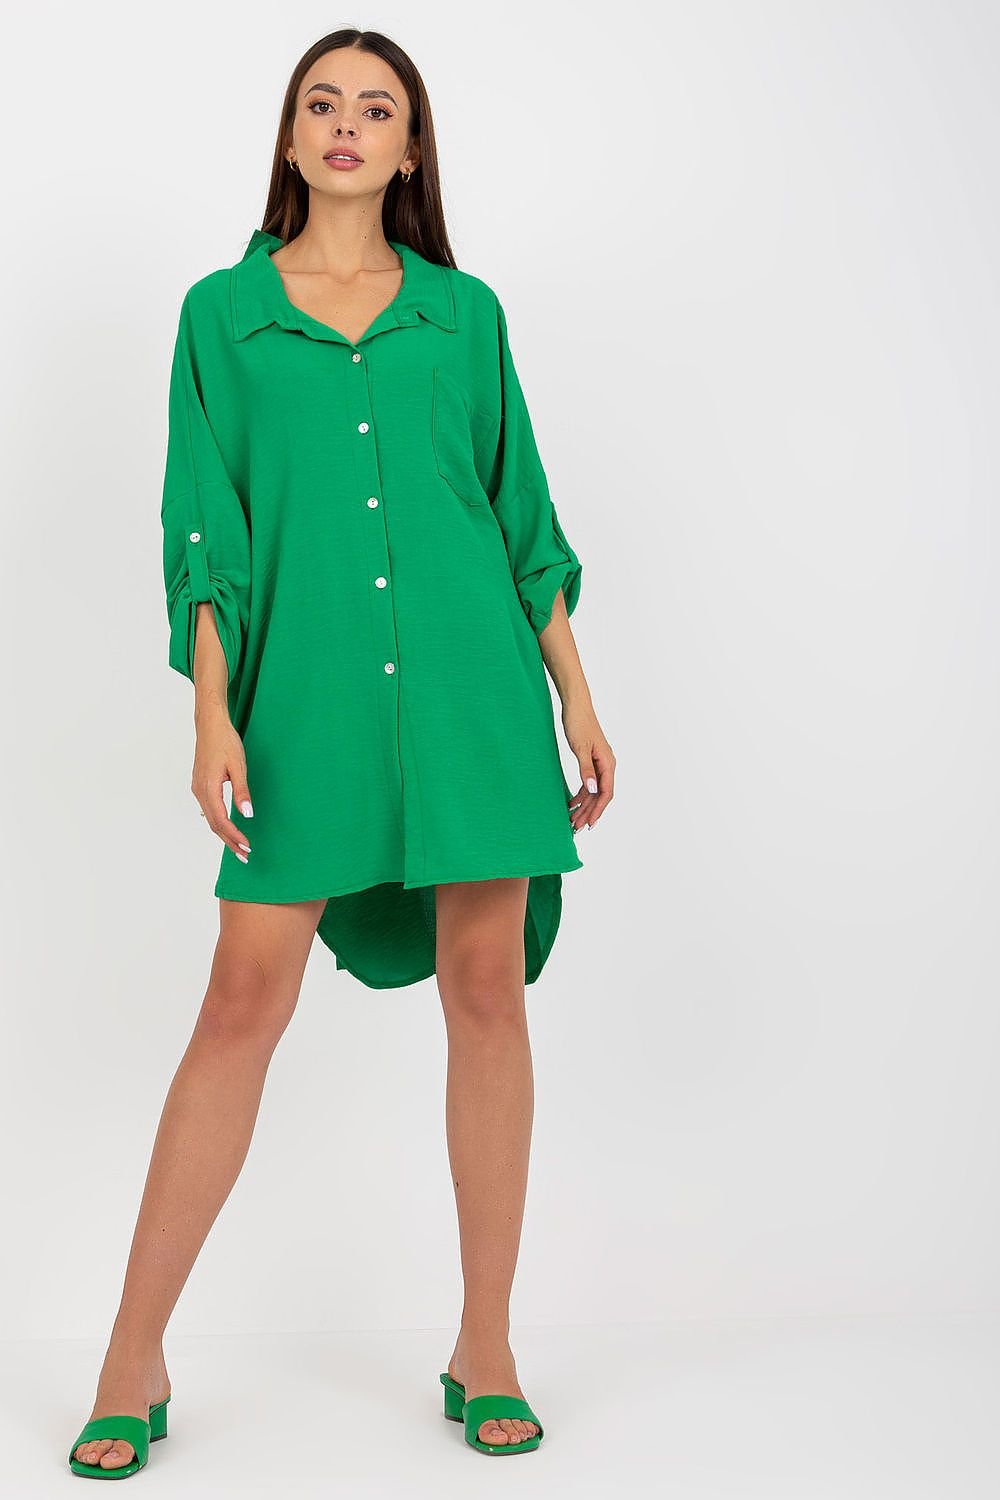 TEEK - Back V-Neck Button-Down Shirt Dress DRESS TEEK MH green 2 One Size 